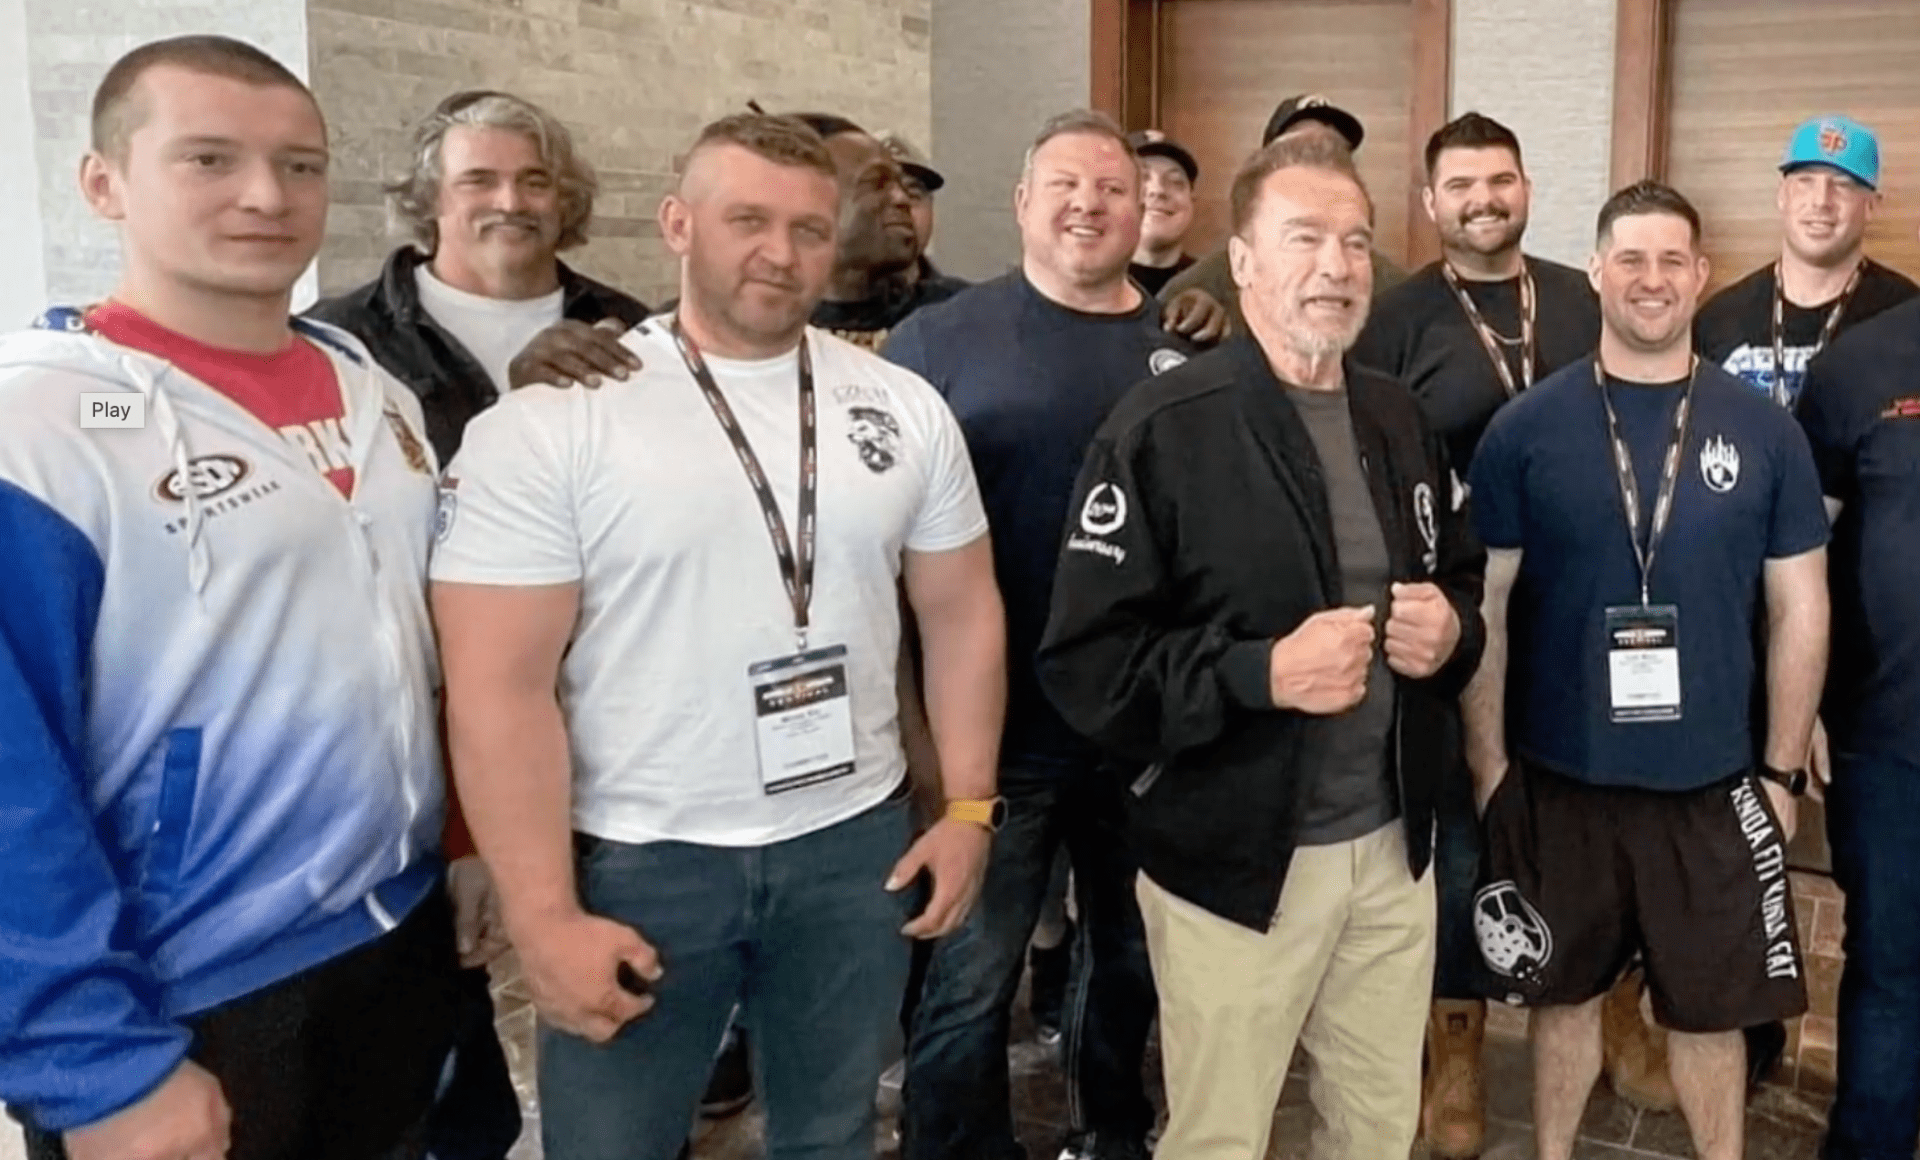 Janu Pipišovi gratuloval sám Arnold Schwarzenegger.